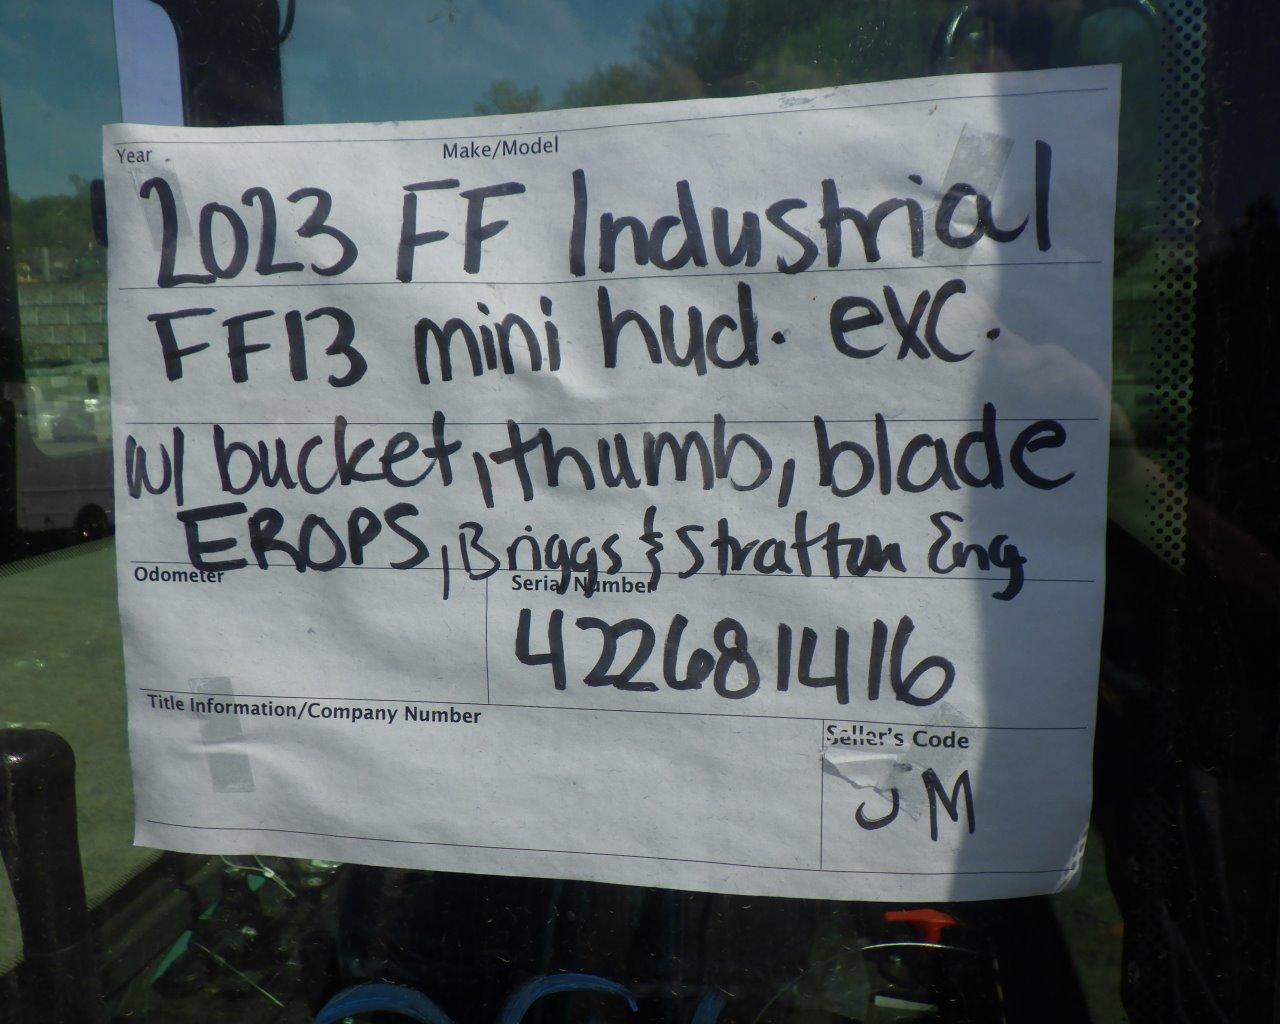 2023 FF INDUSTRIAL FF13 Mini Hyd Excavator w/Bucket   Thumb   Blade   EROPS